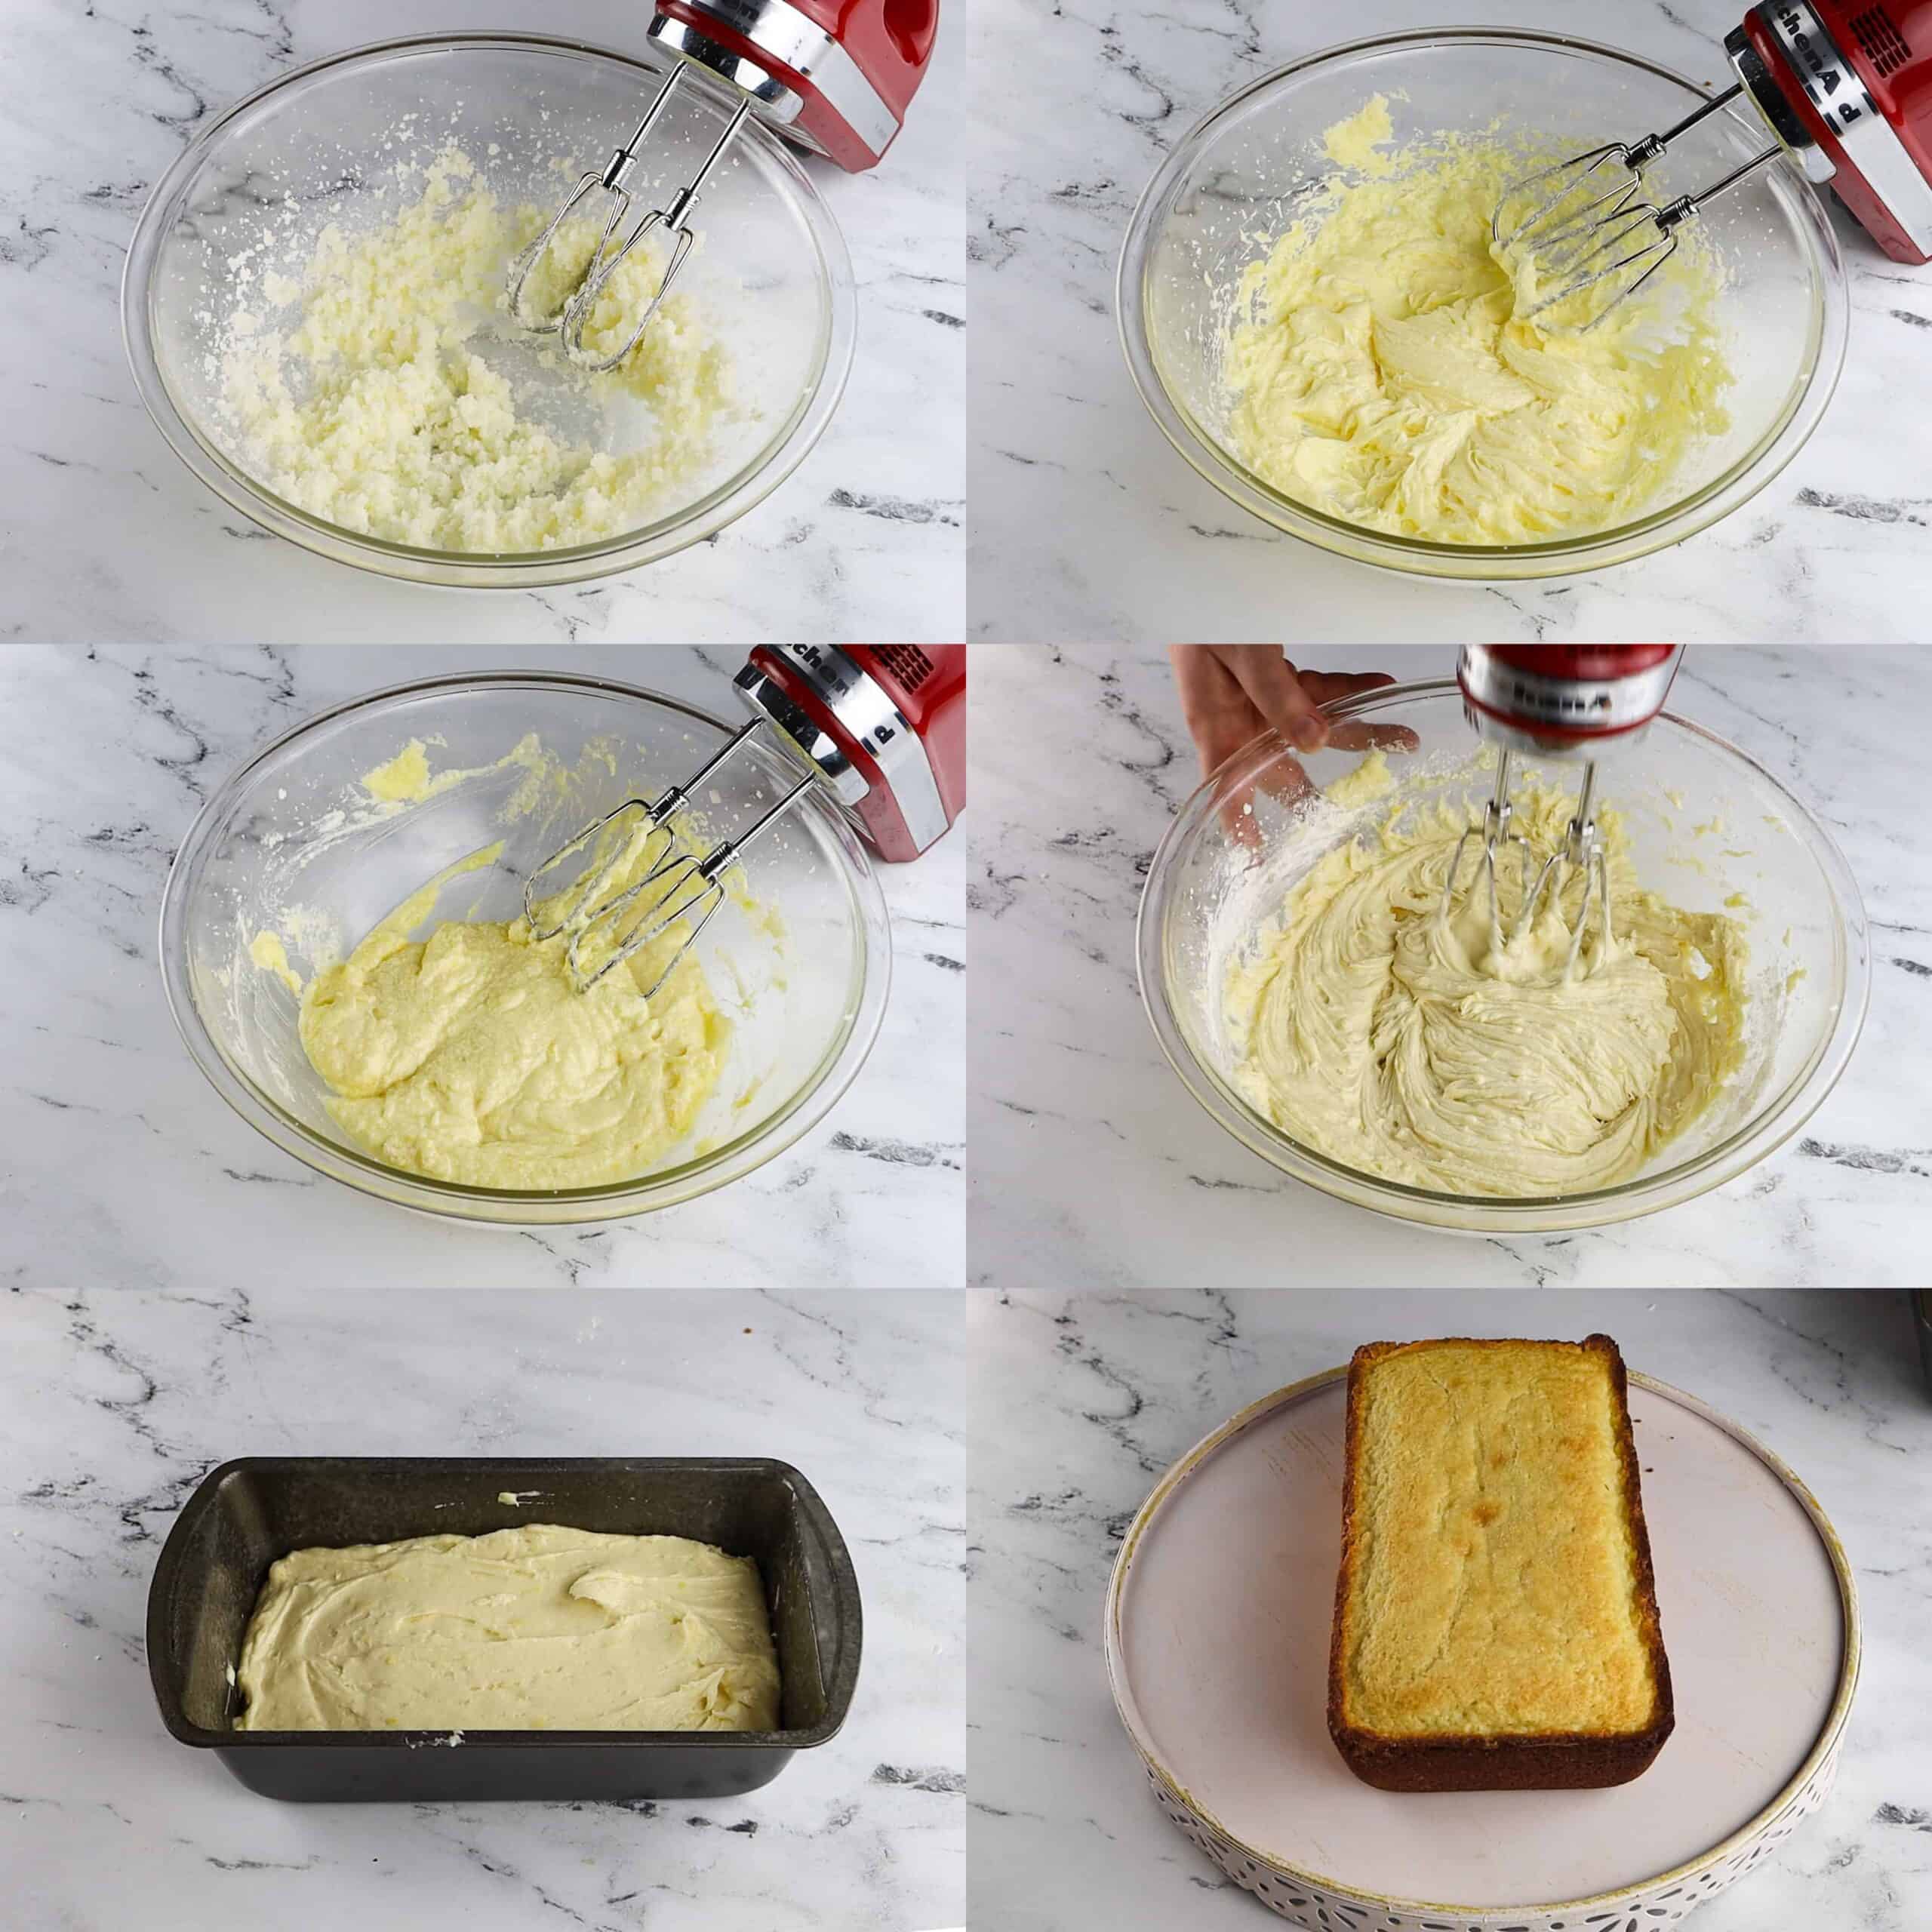 Process Shots of Making Lemon Bread